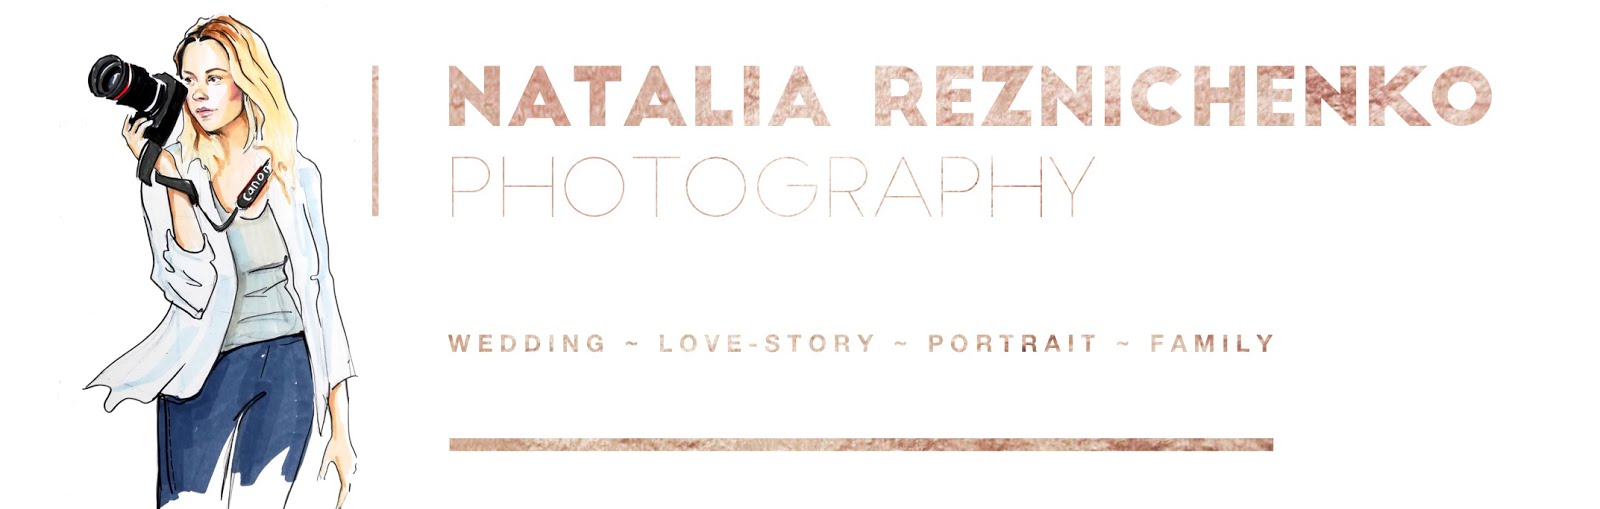 Natalia Reznichenko Photography,  свадебный фотограф в Римини и Италии